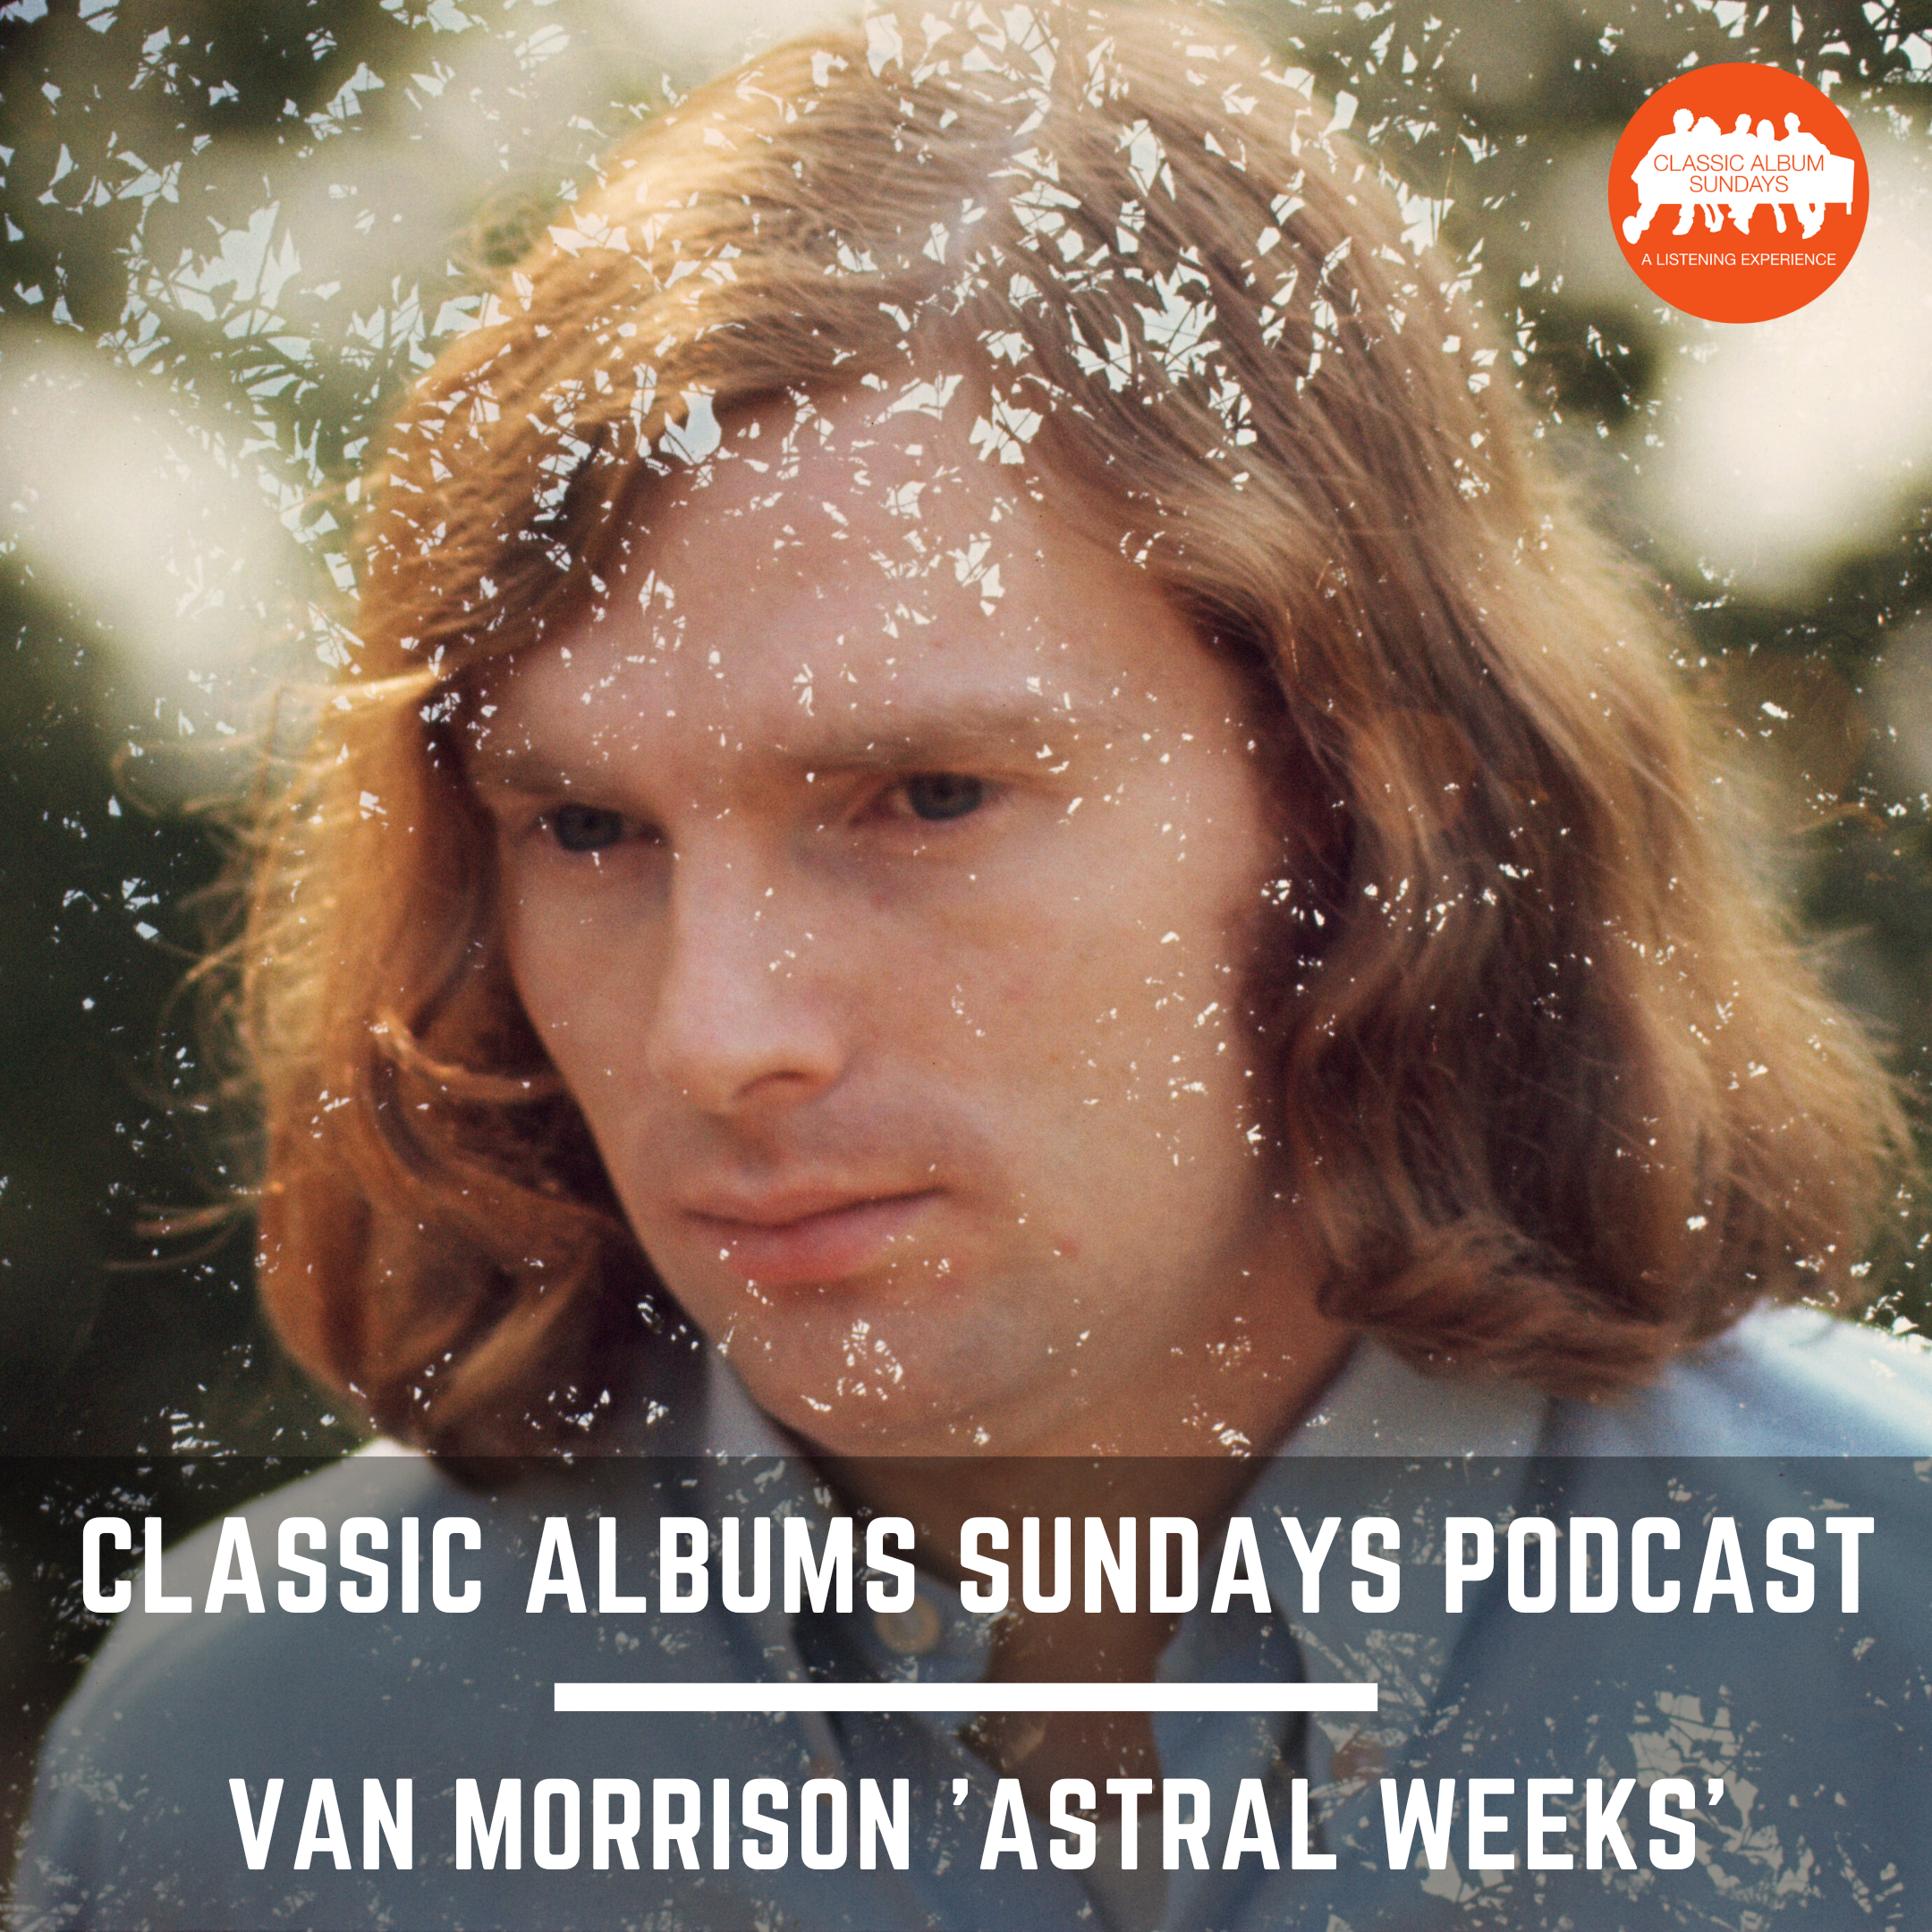 Classic Album Sundays Podcast - Van Morrison 'Astral Weeks'